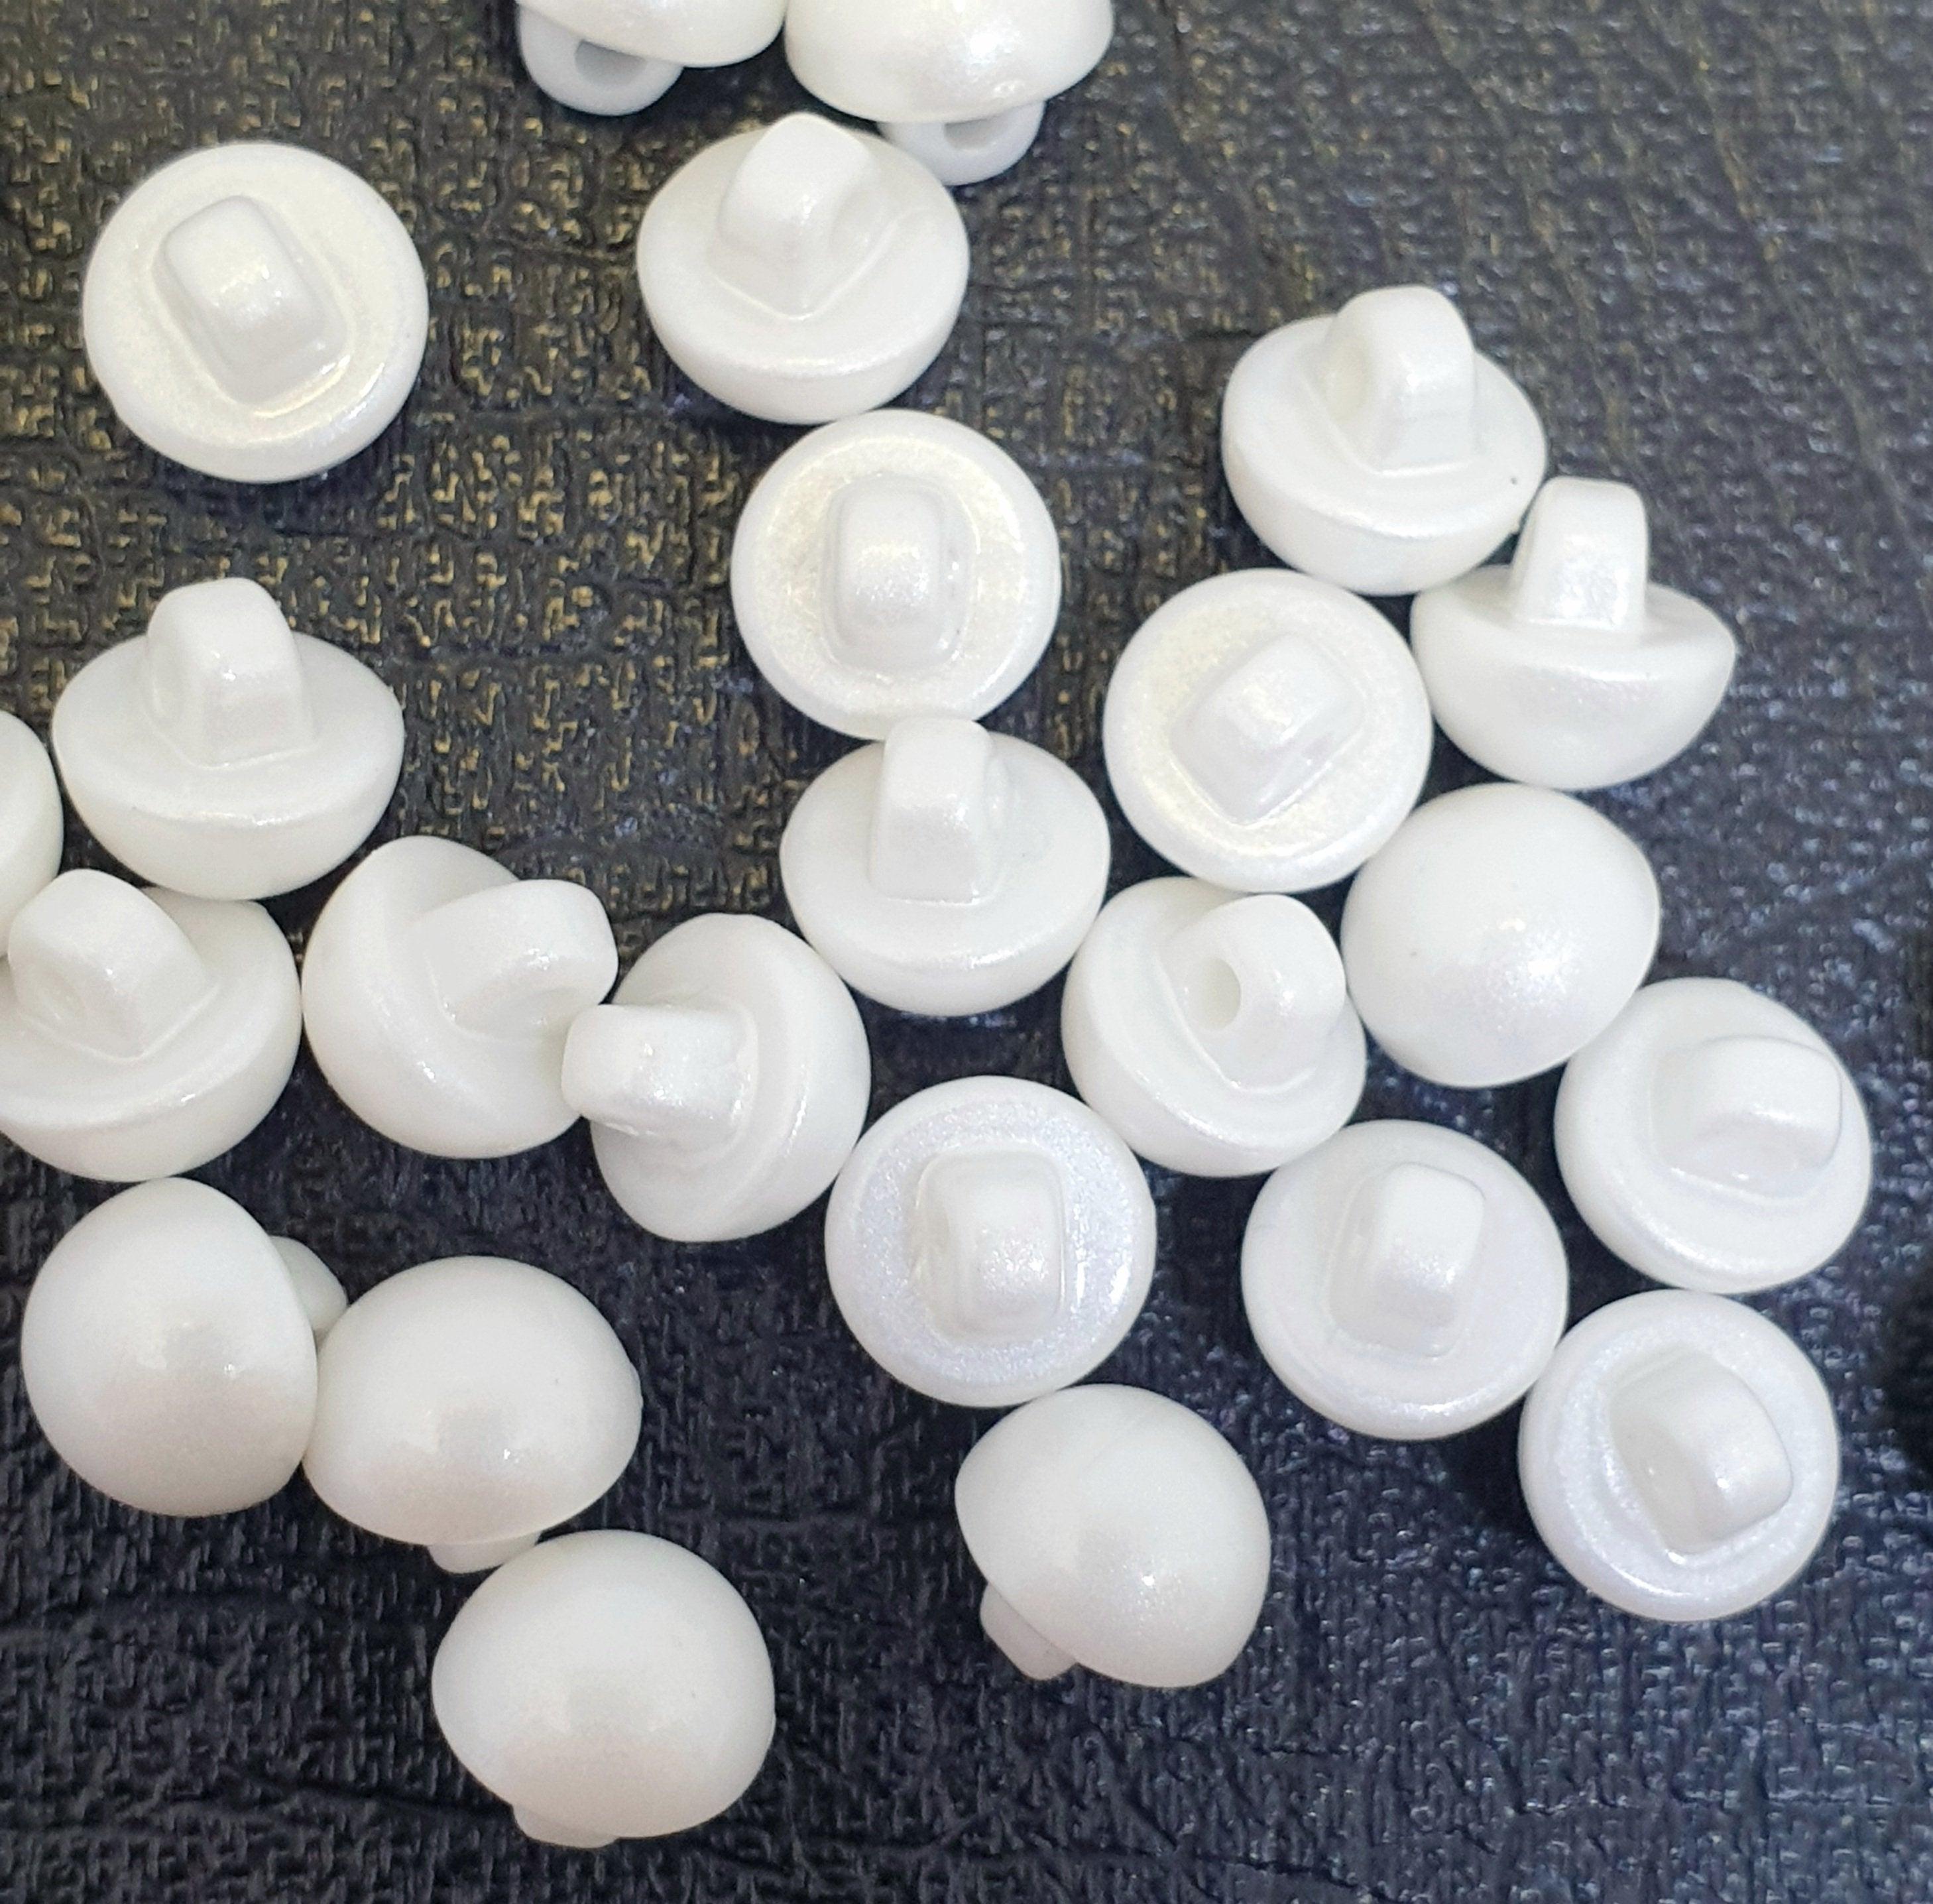 MajorCrafts 30pcs 10mm White High-Grade Acrylic Small Round Sewing Mushroom Shank Buttons